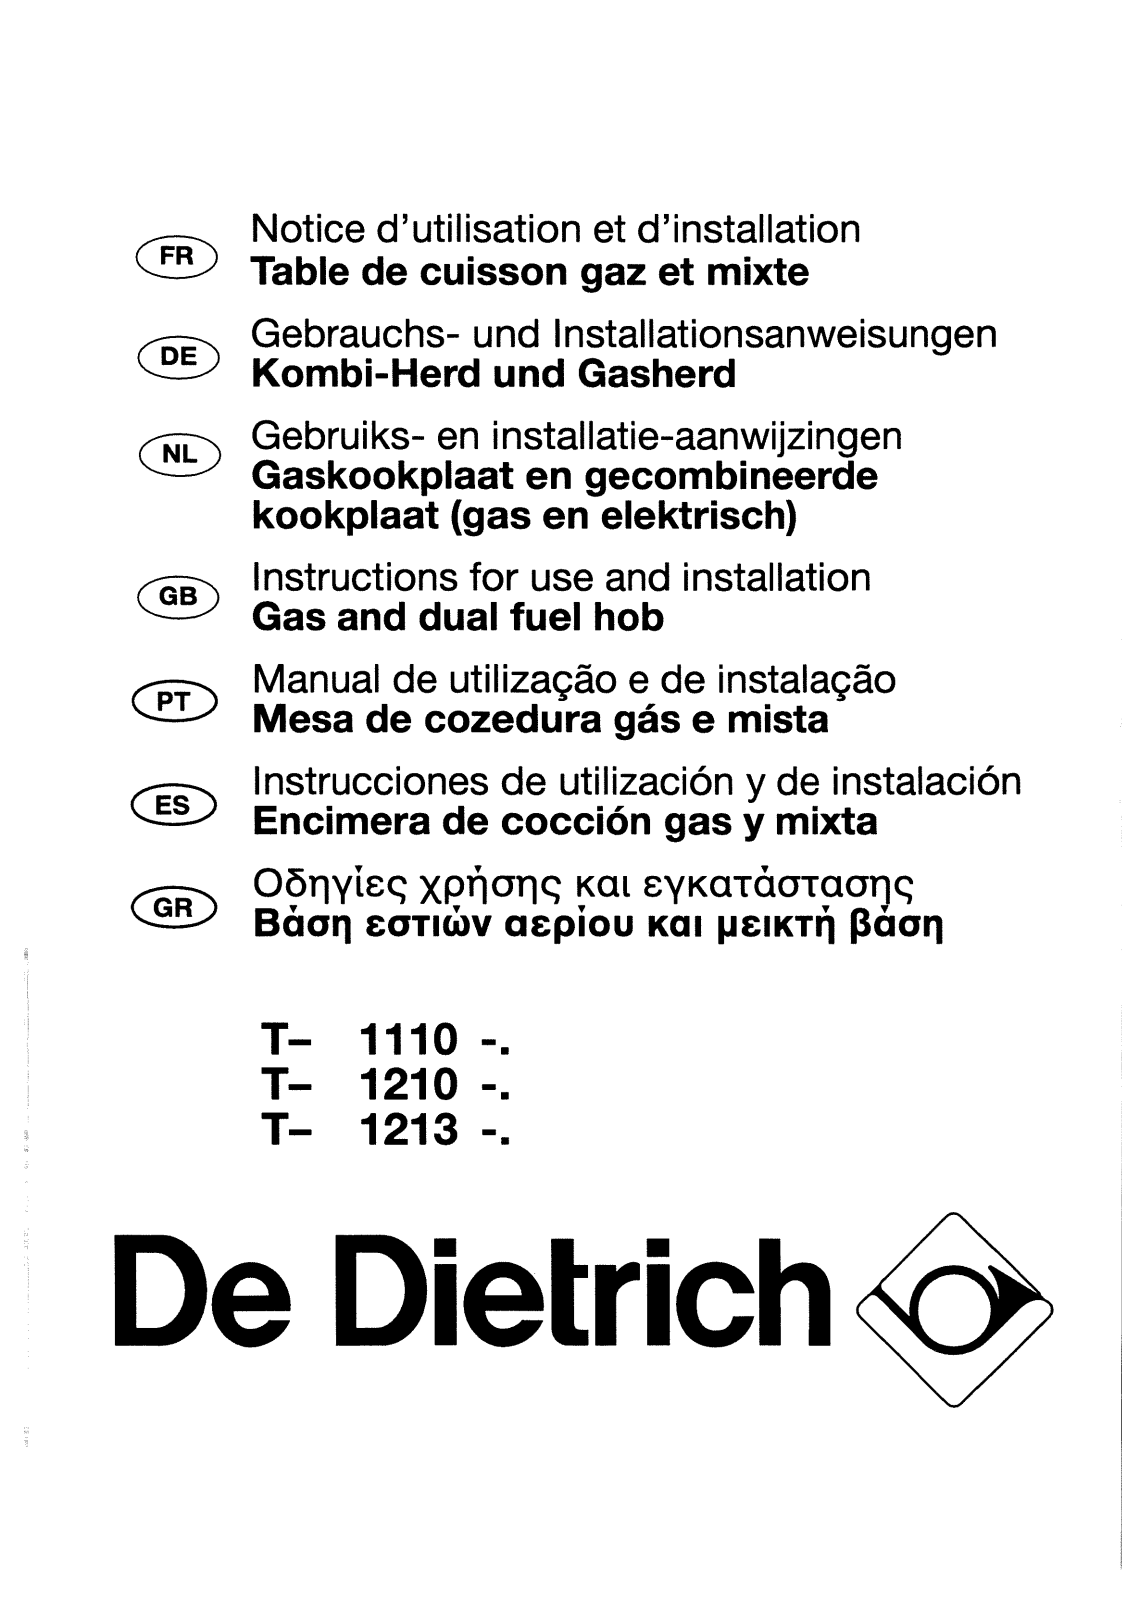 De dietrich TN1210E1N, TN1213E1, TN1213E1N, TN1110E1N, TN1210E1 User Manual